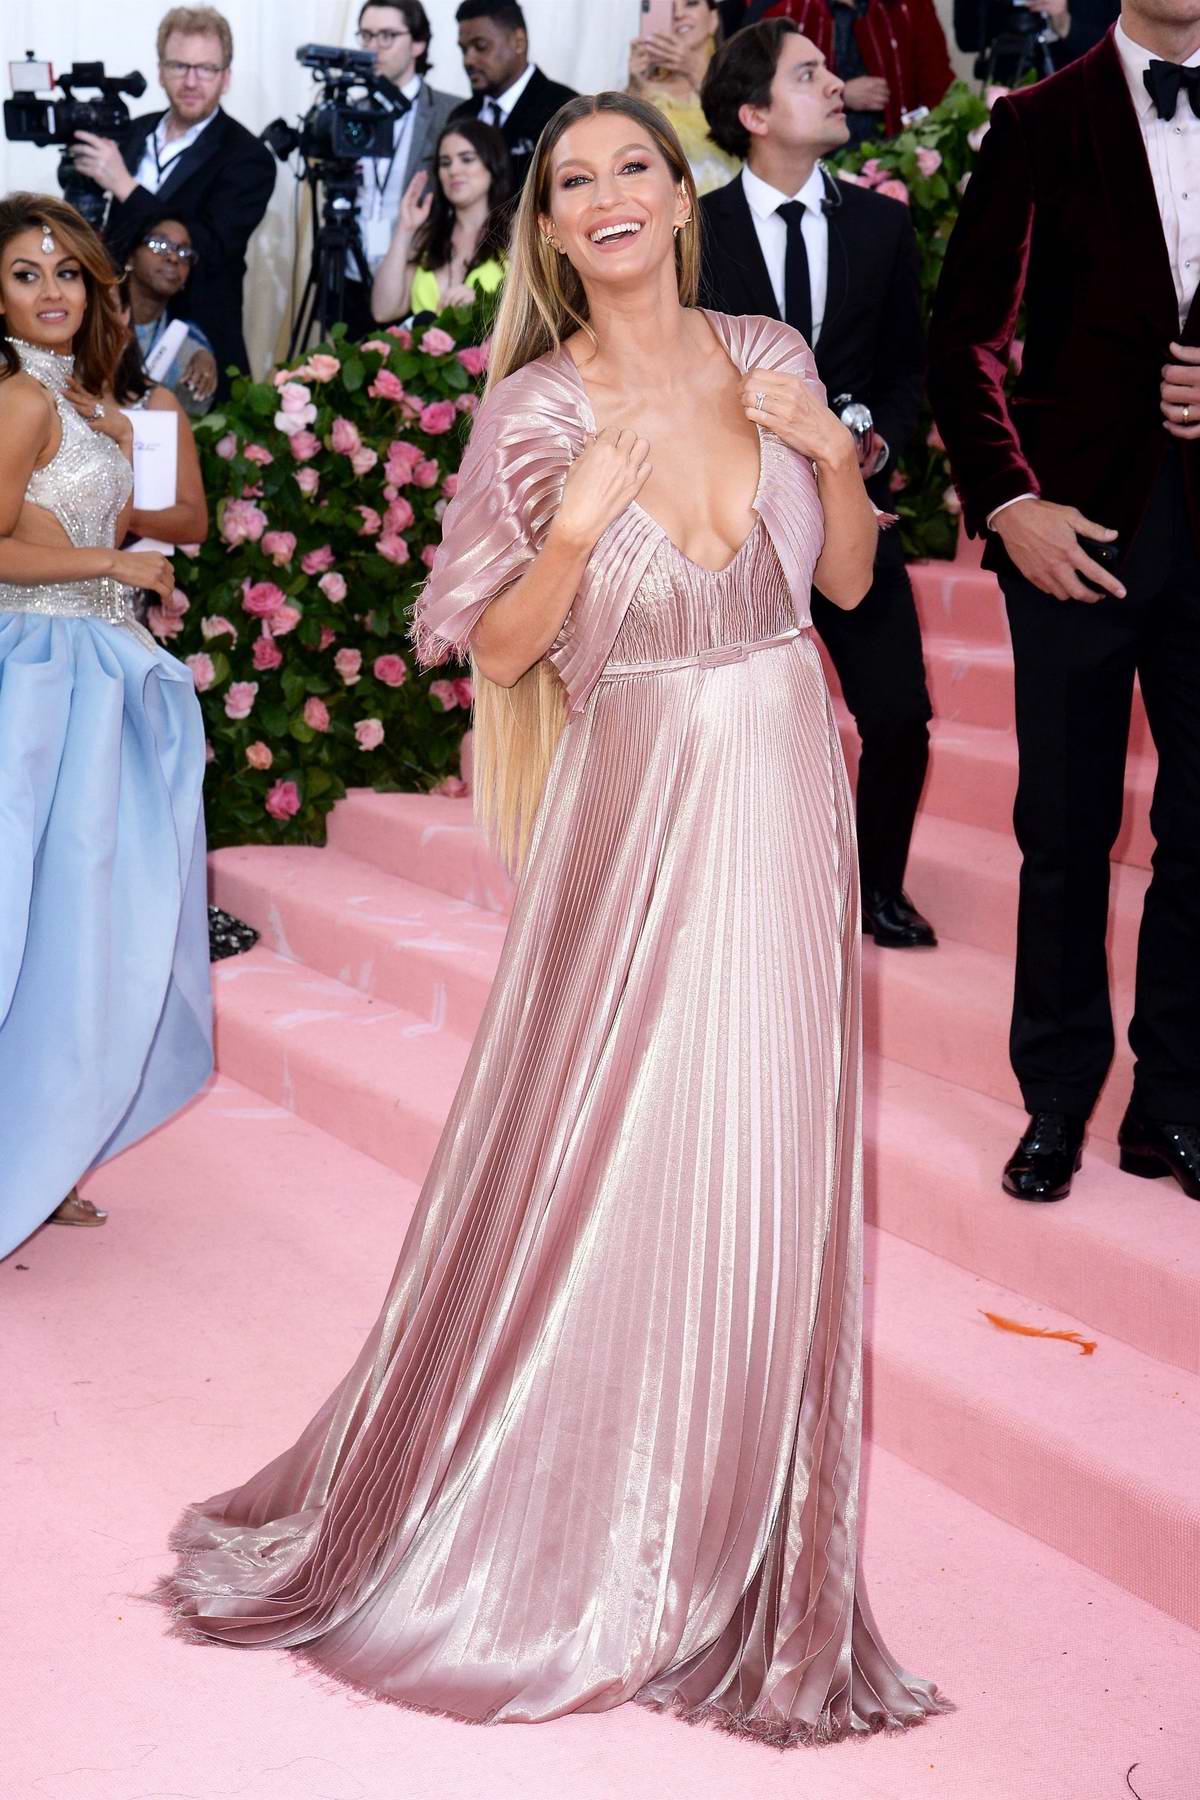 Gisele Bundchen in Dior attends the 2019 Met Gala in NYC. #bestdressed